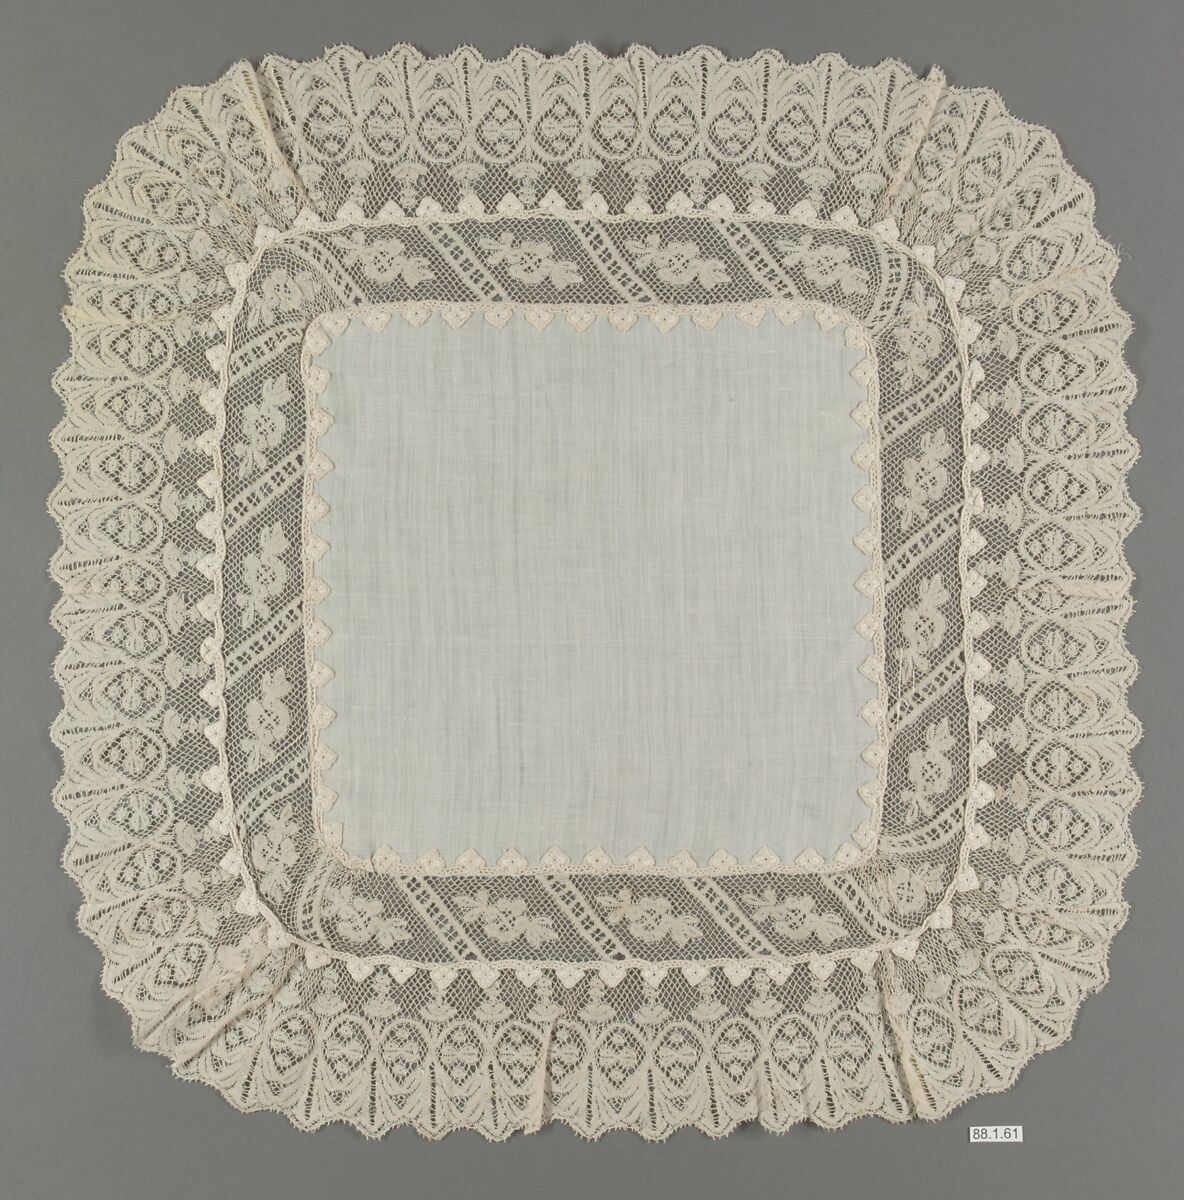 Handkerchief, Bobbin lace, French 